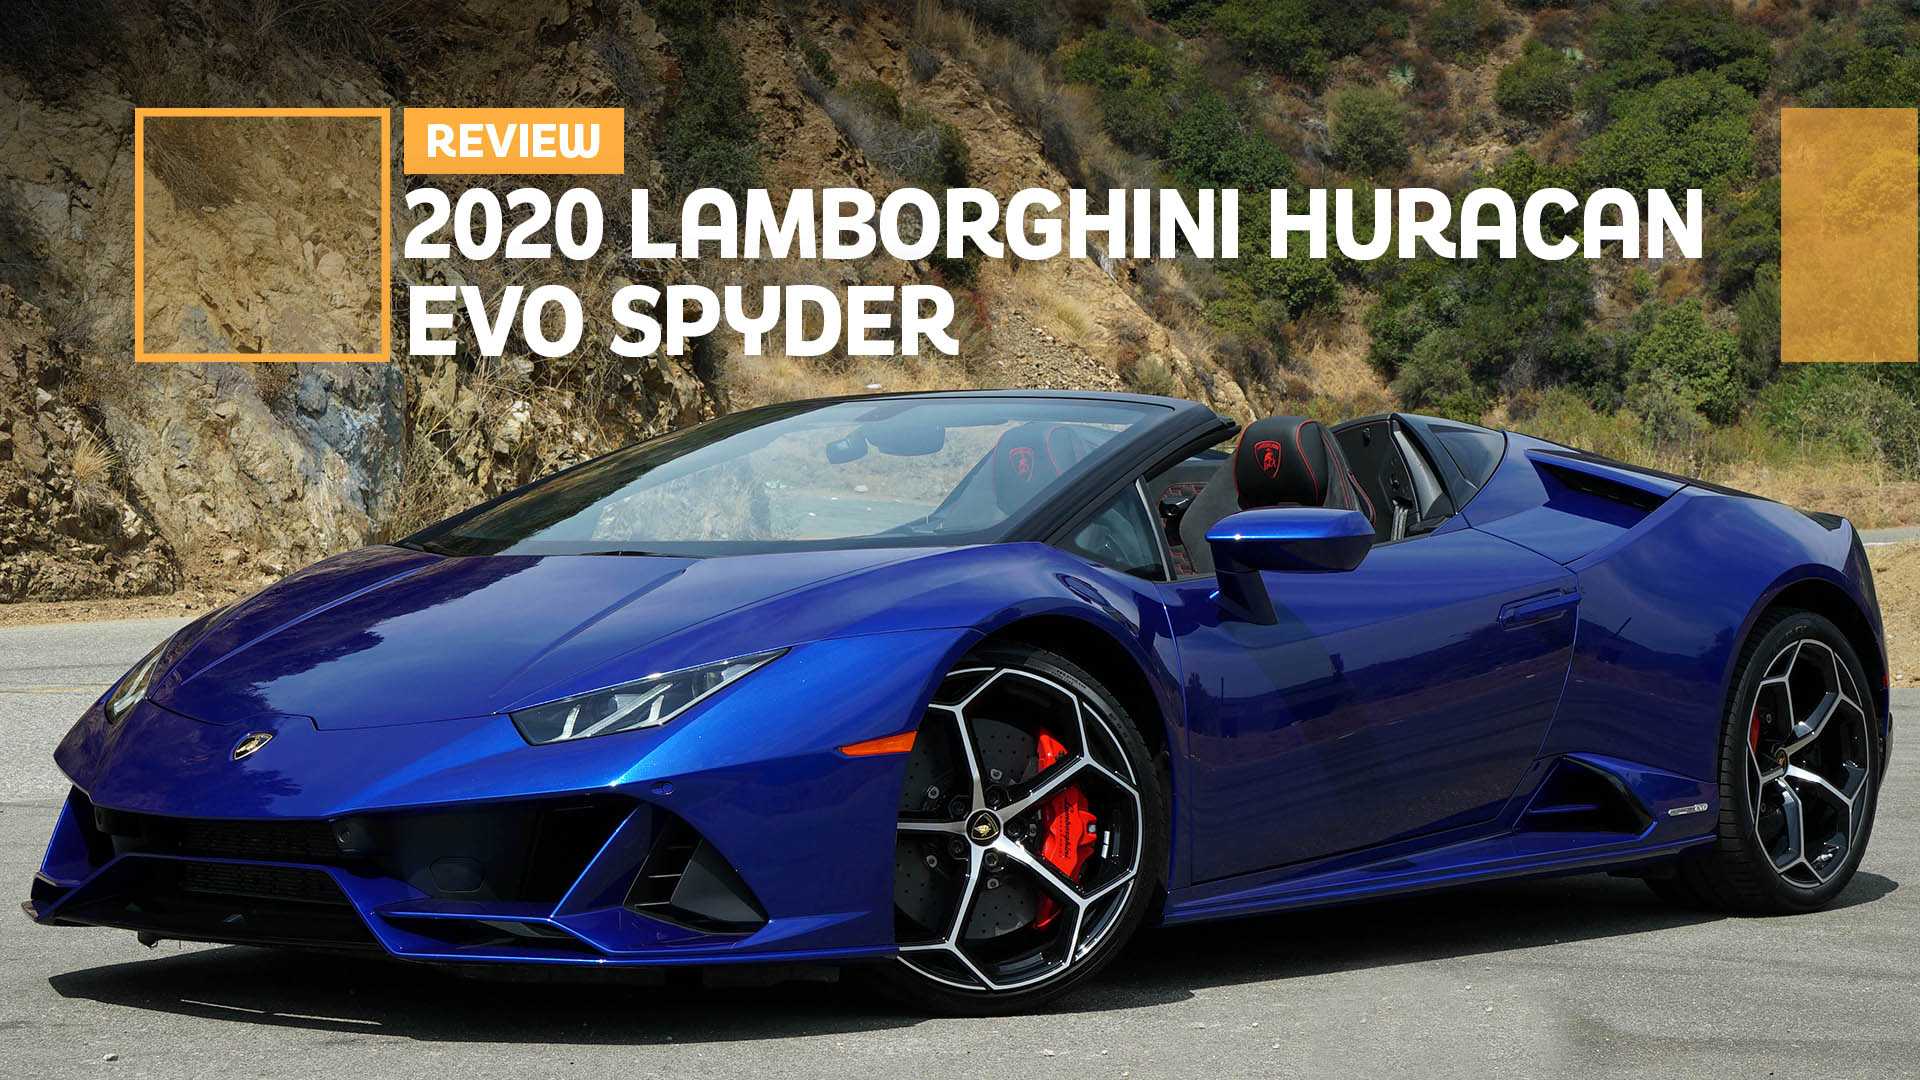 Lamborghini Huracan Evo Spyder Review: Hooked On A Feeling